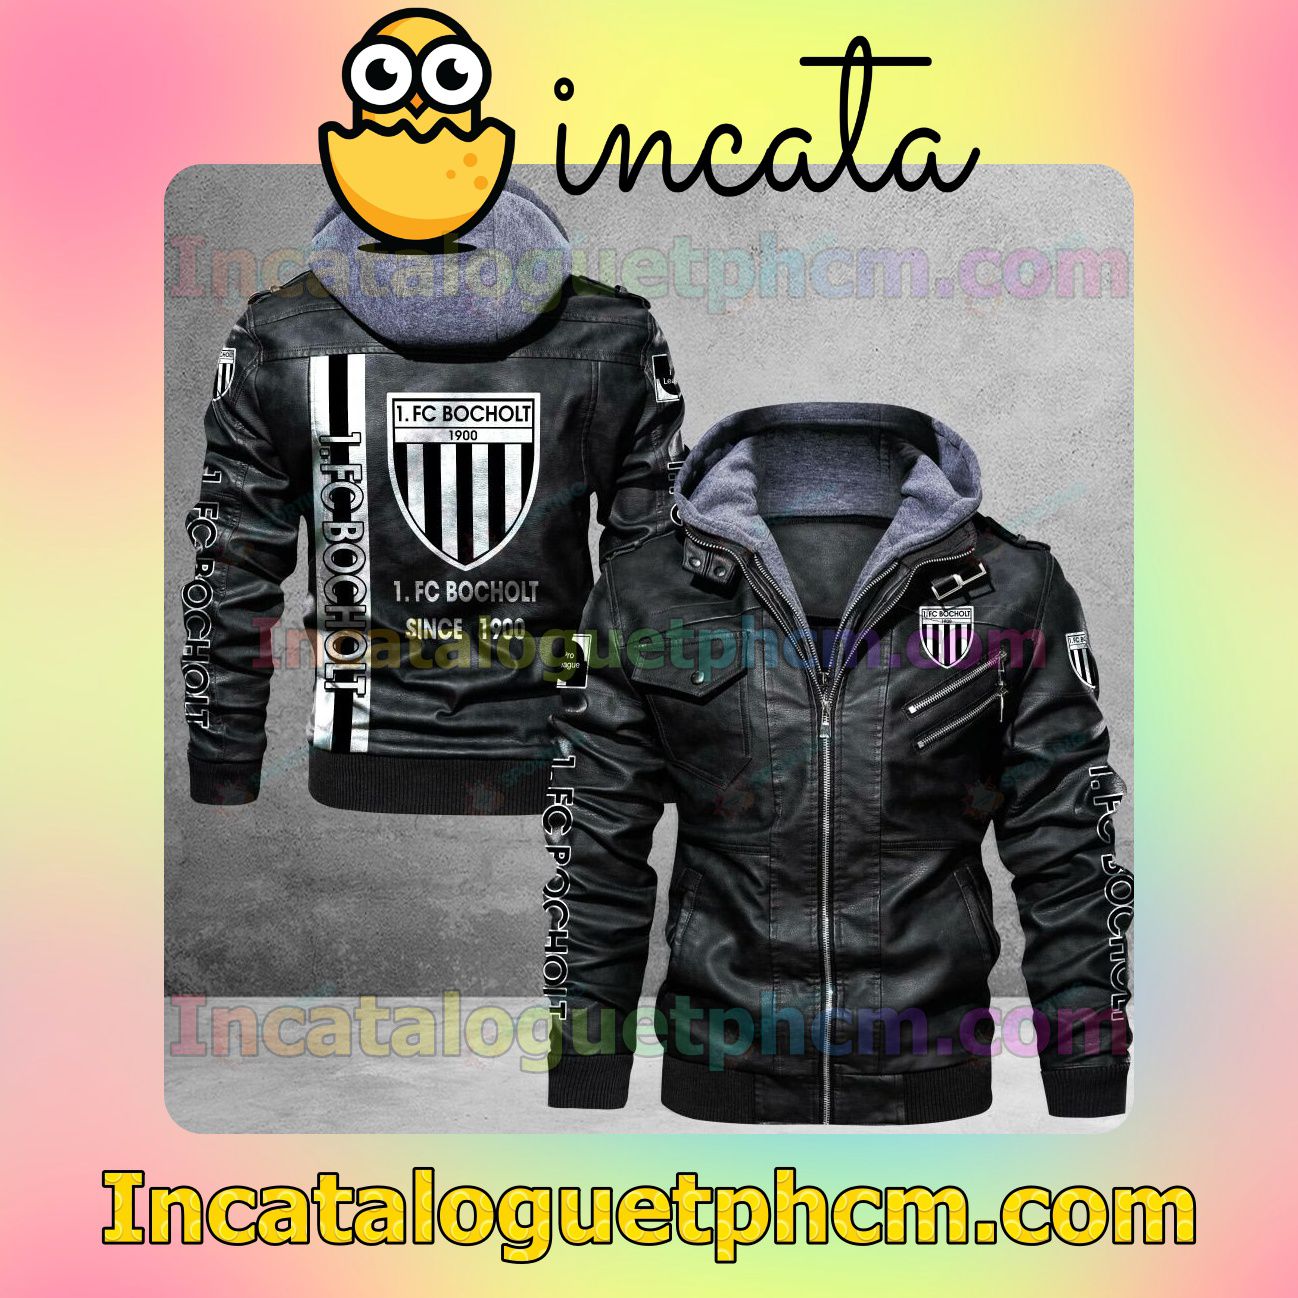 1. FC Bocholt Brand Uniform Leather Jacket